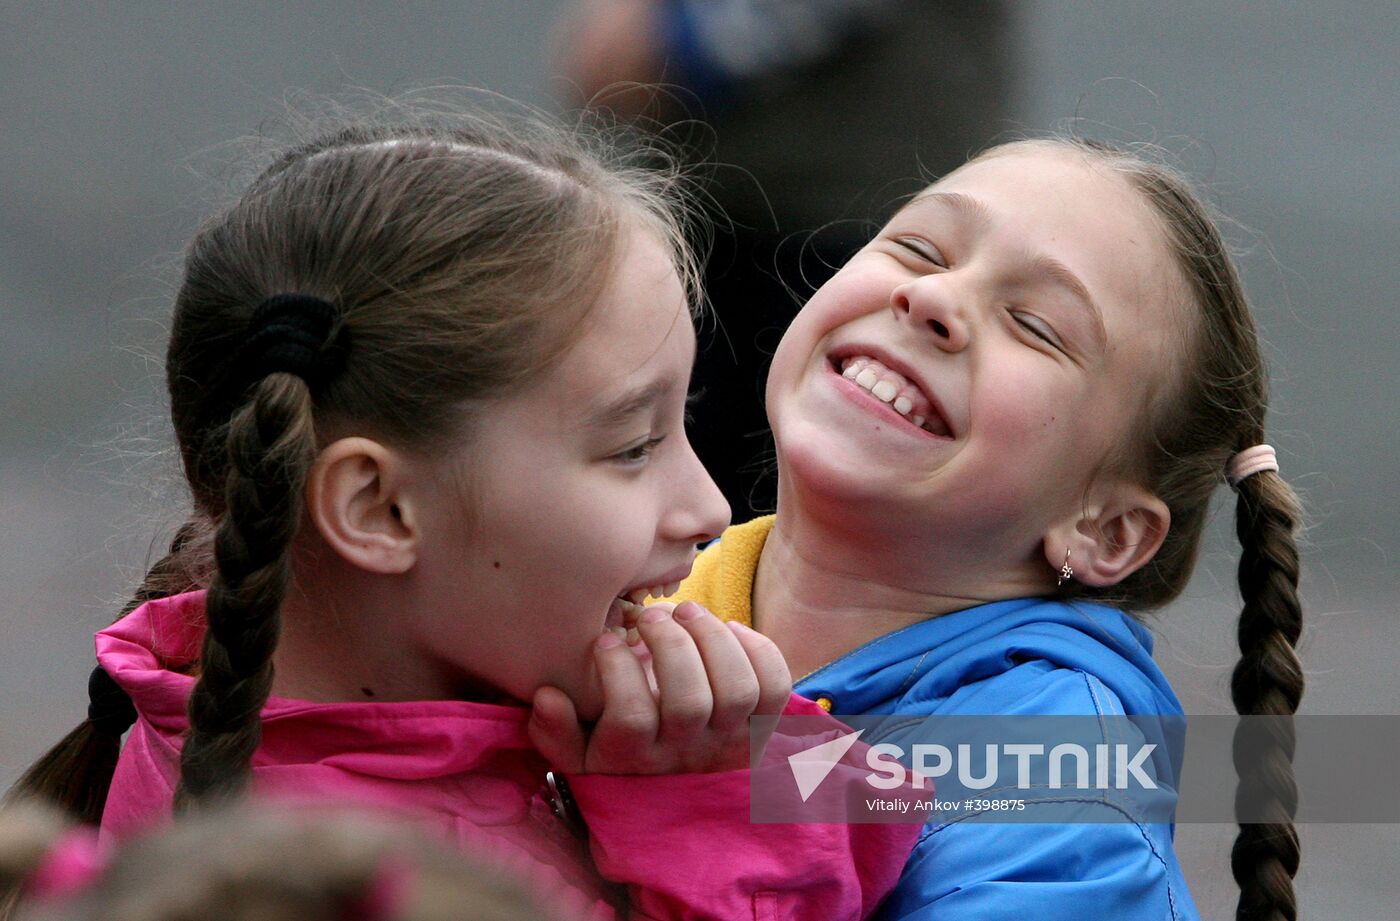 Vladivostok to celebrate International Children's Day